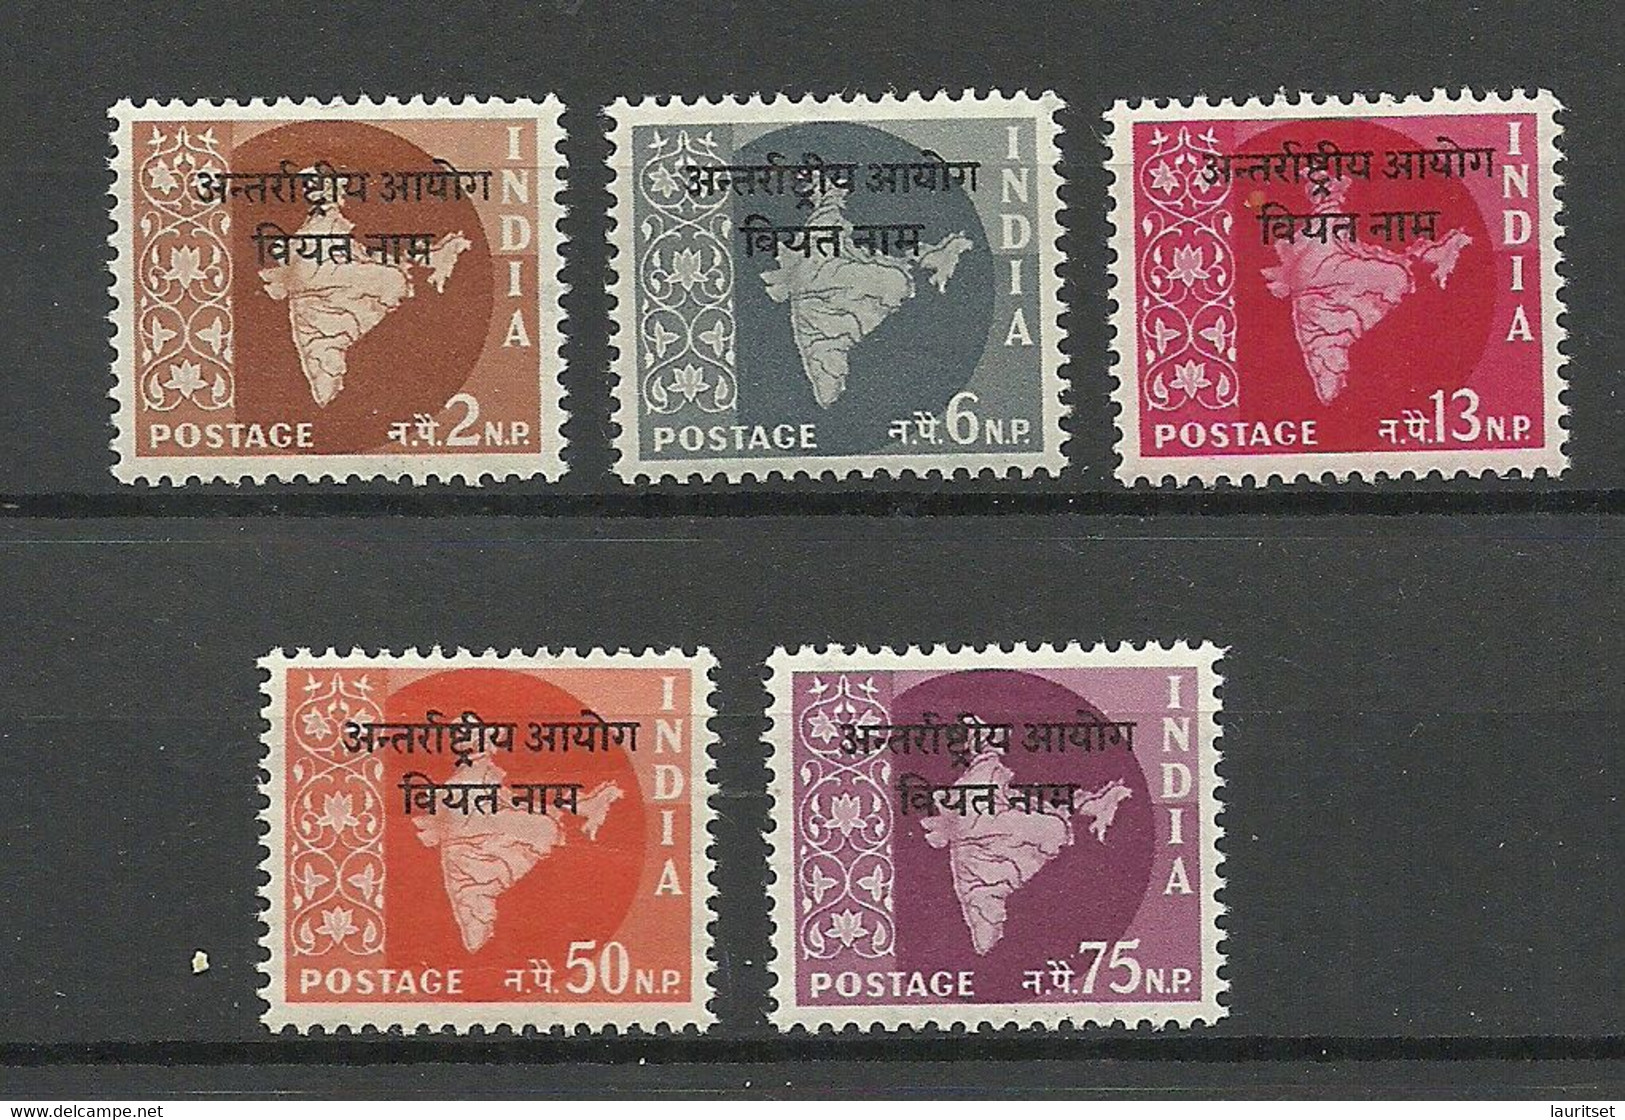 INDIA Polizeitruppen Issue Of Police Troops For Vietnam 1957 Michel 6 - 10 * - Militärpostmarken